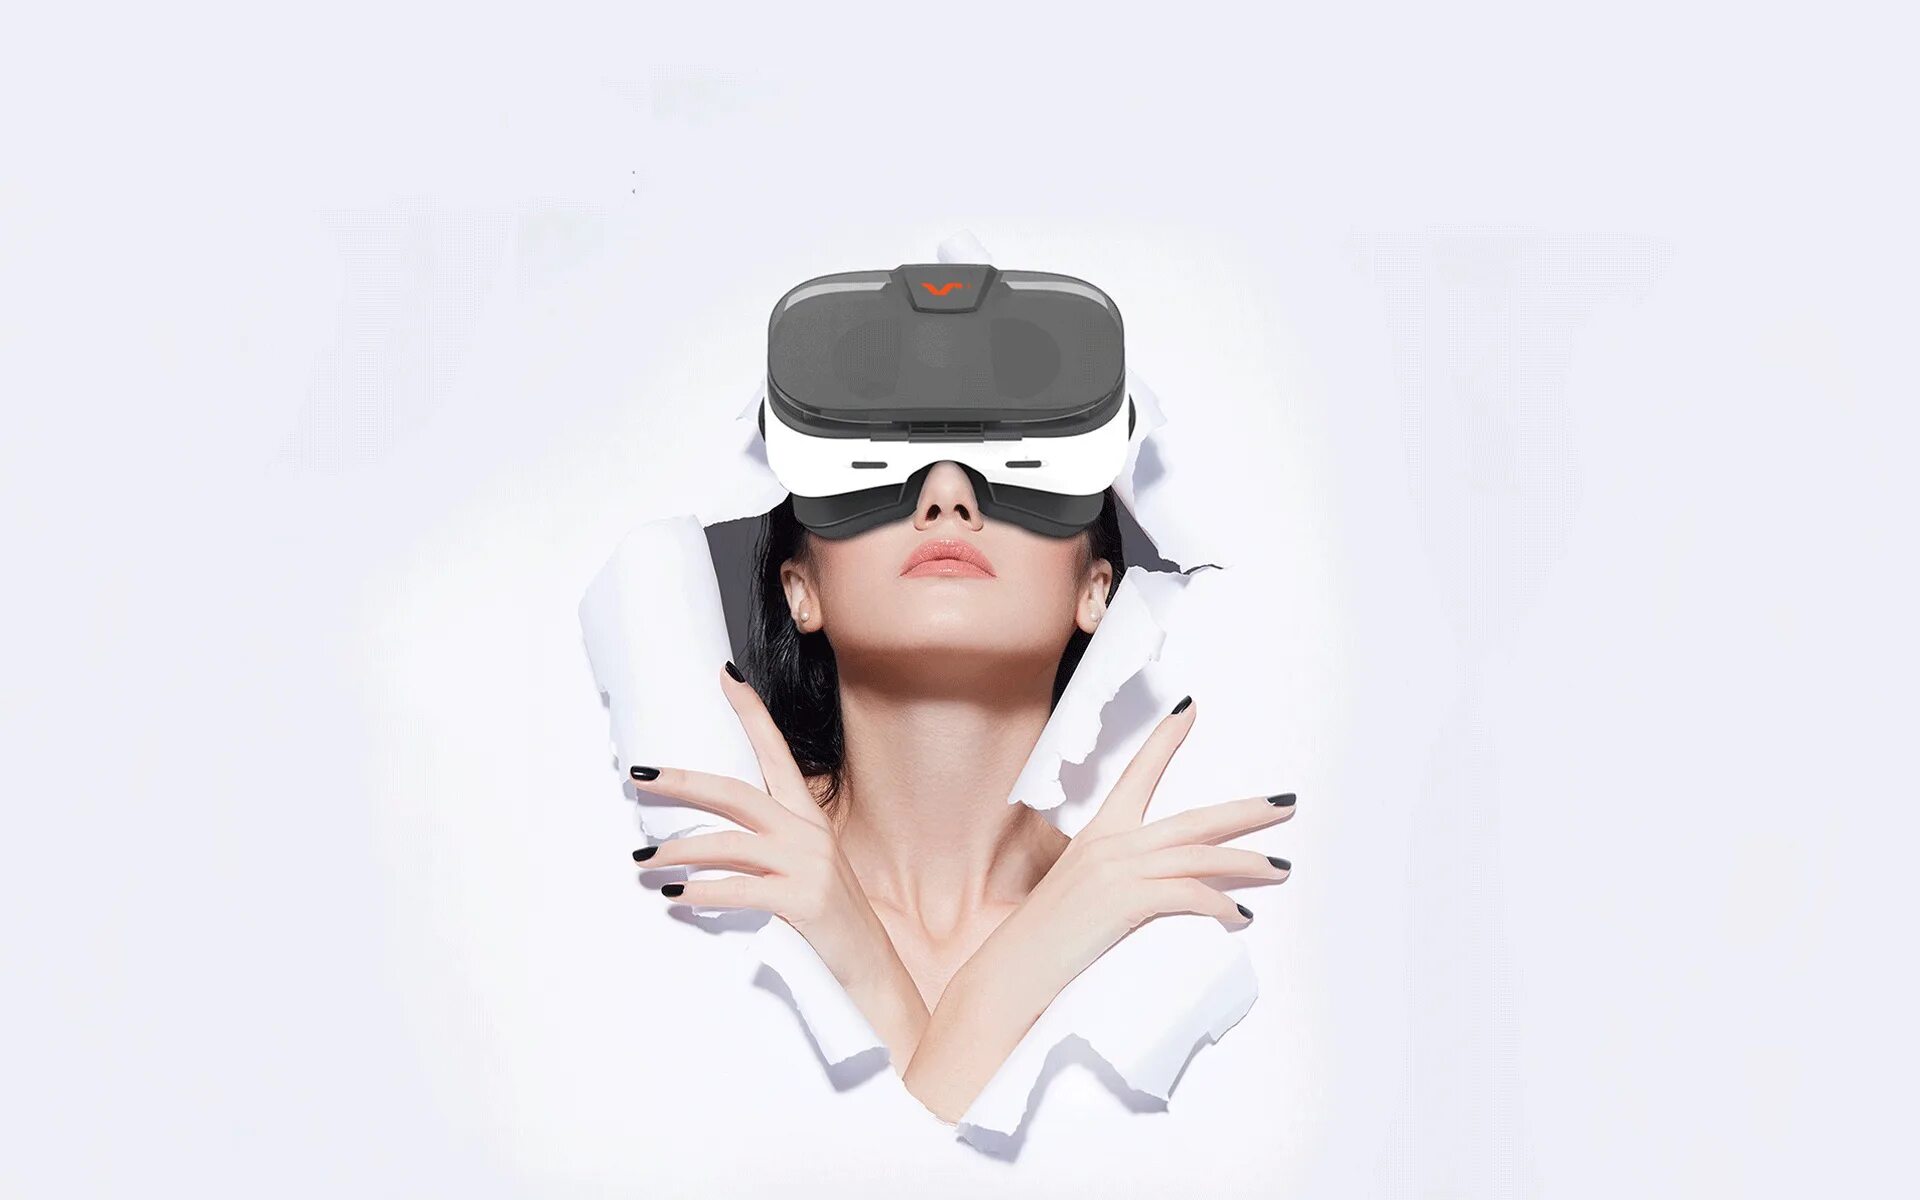 VR шлем 360max. Очки виртуальной реальности 360 VR. Шлем виртуальной реальности 3glasses s1. Девушка в очках виртуальной реальности. Виар трансов